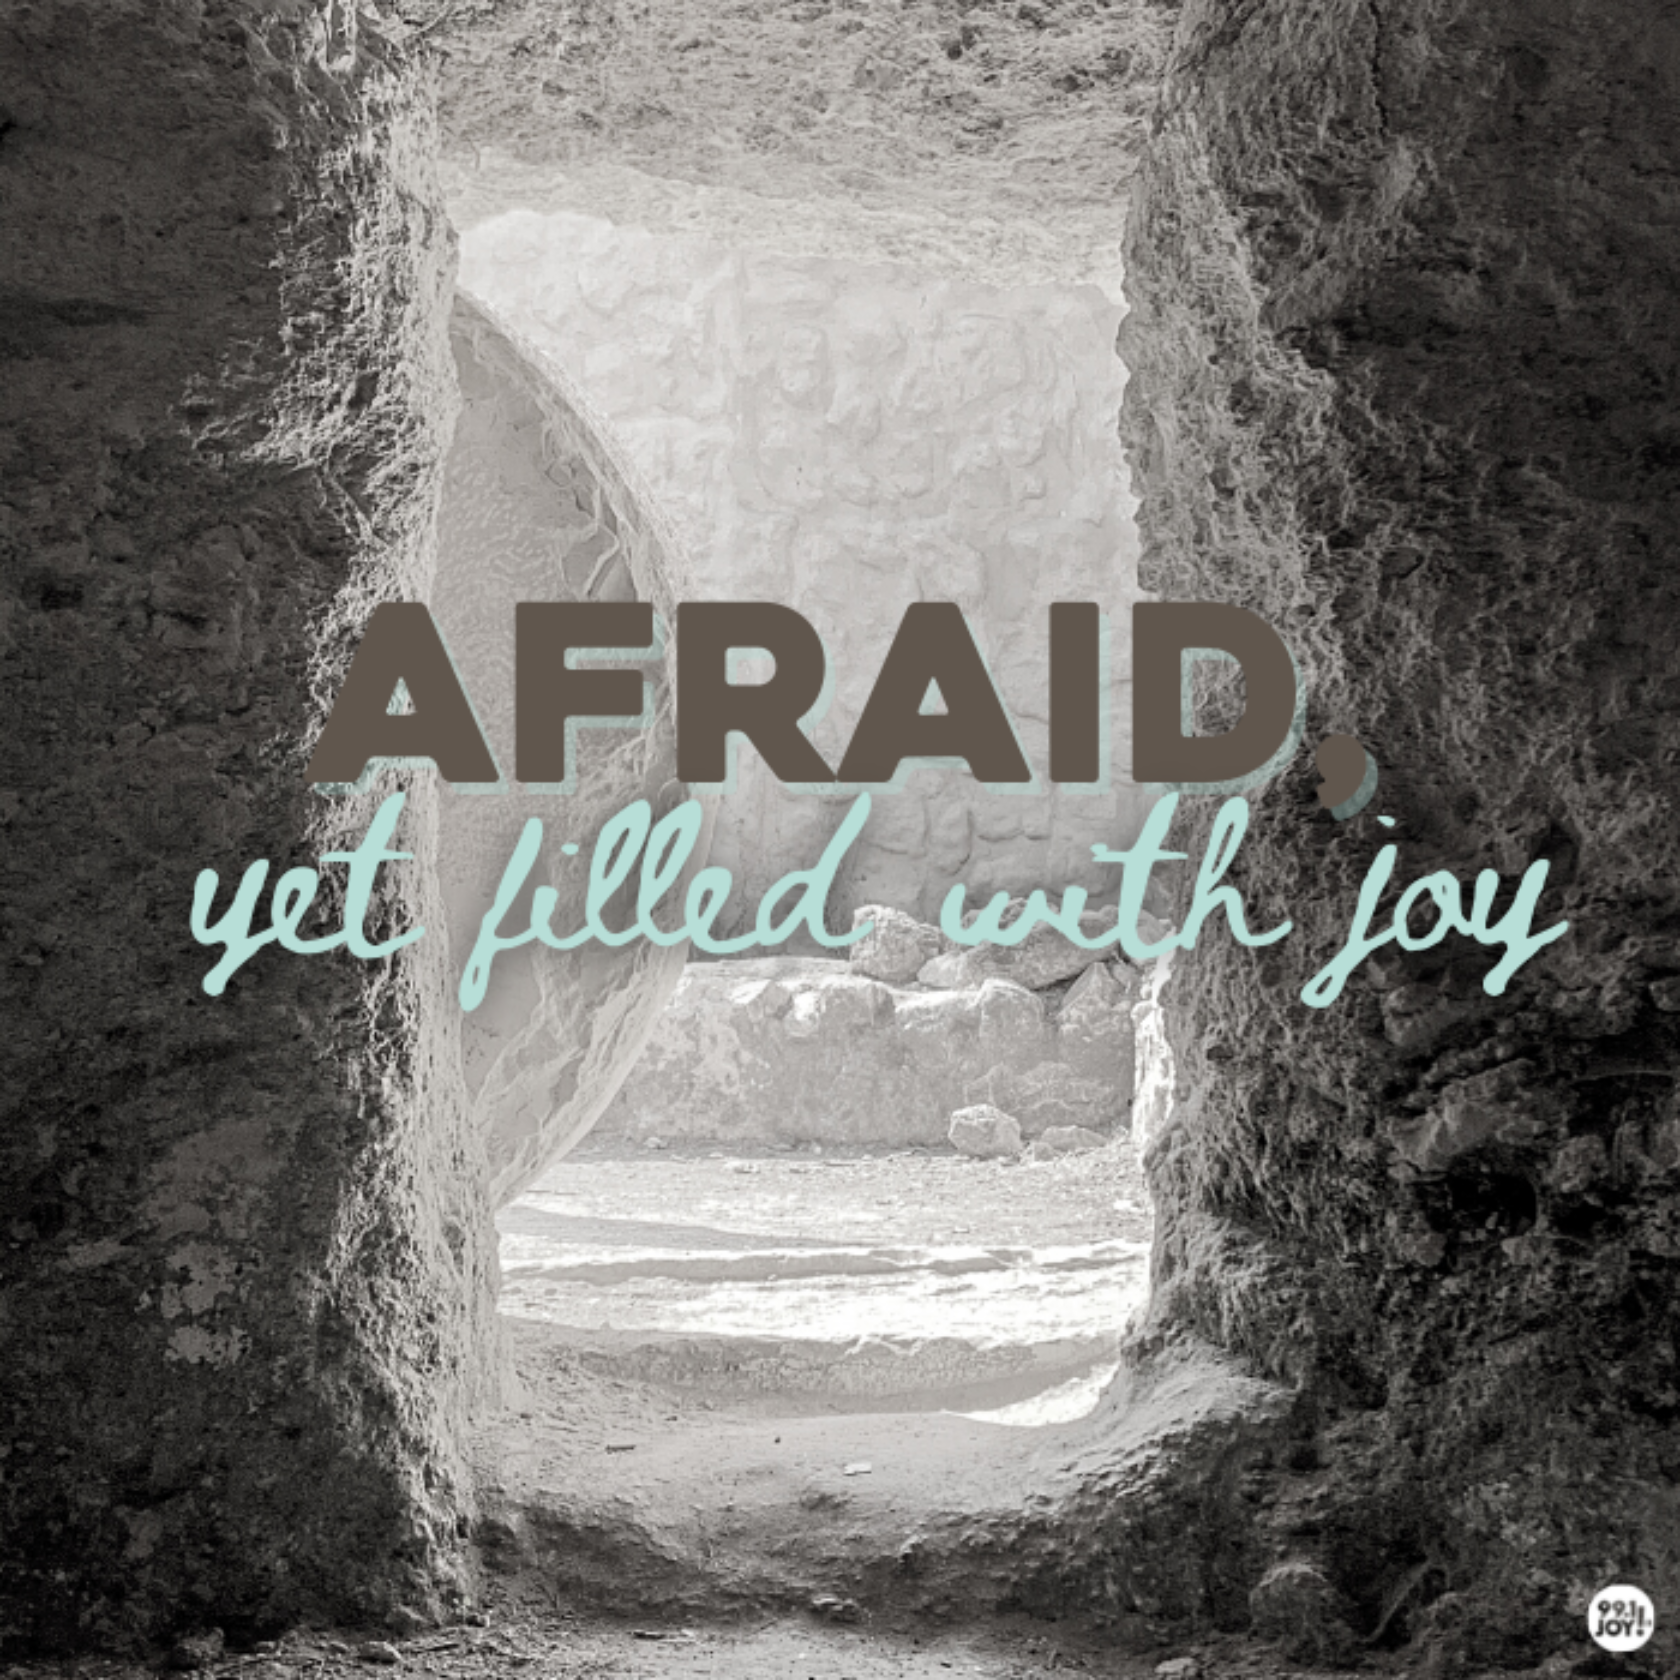 Afraid, Yet Filled With Joy